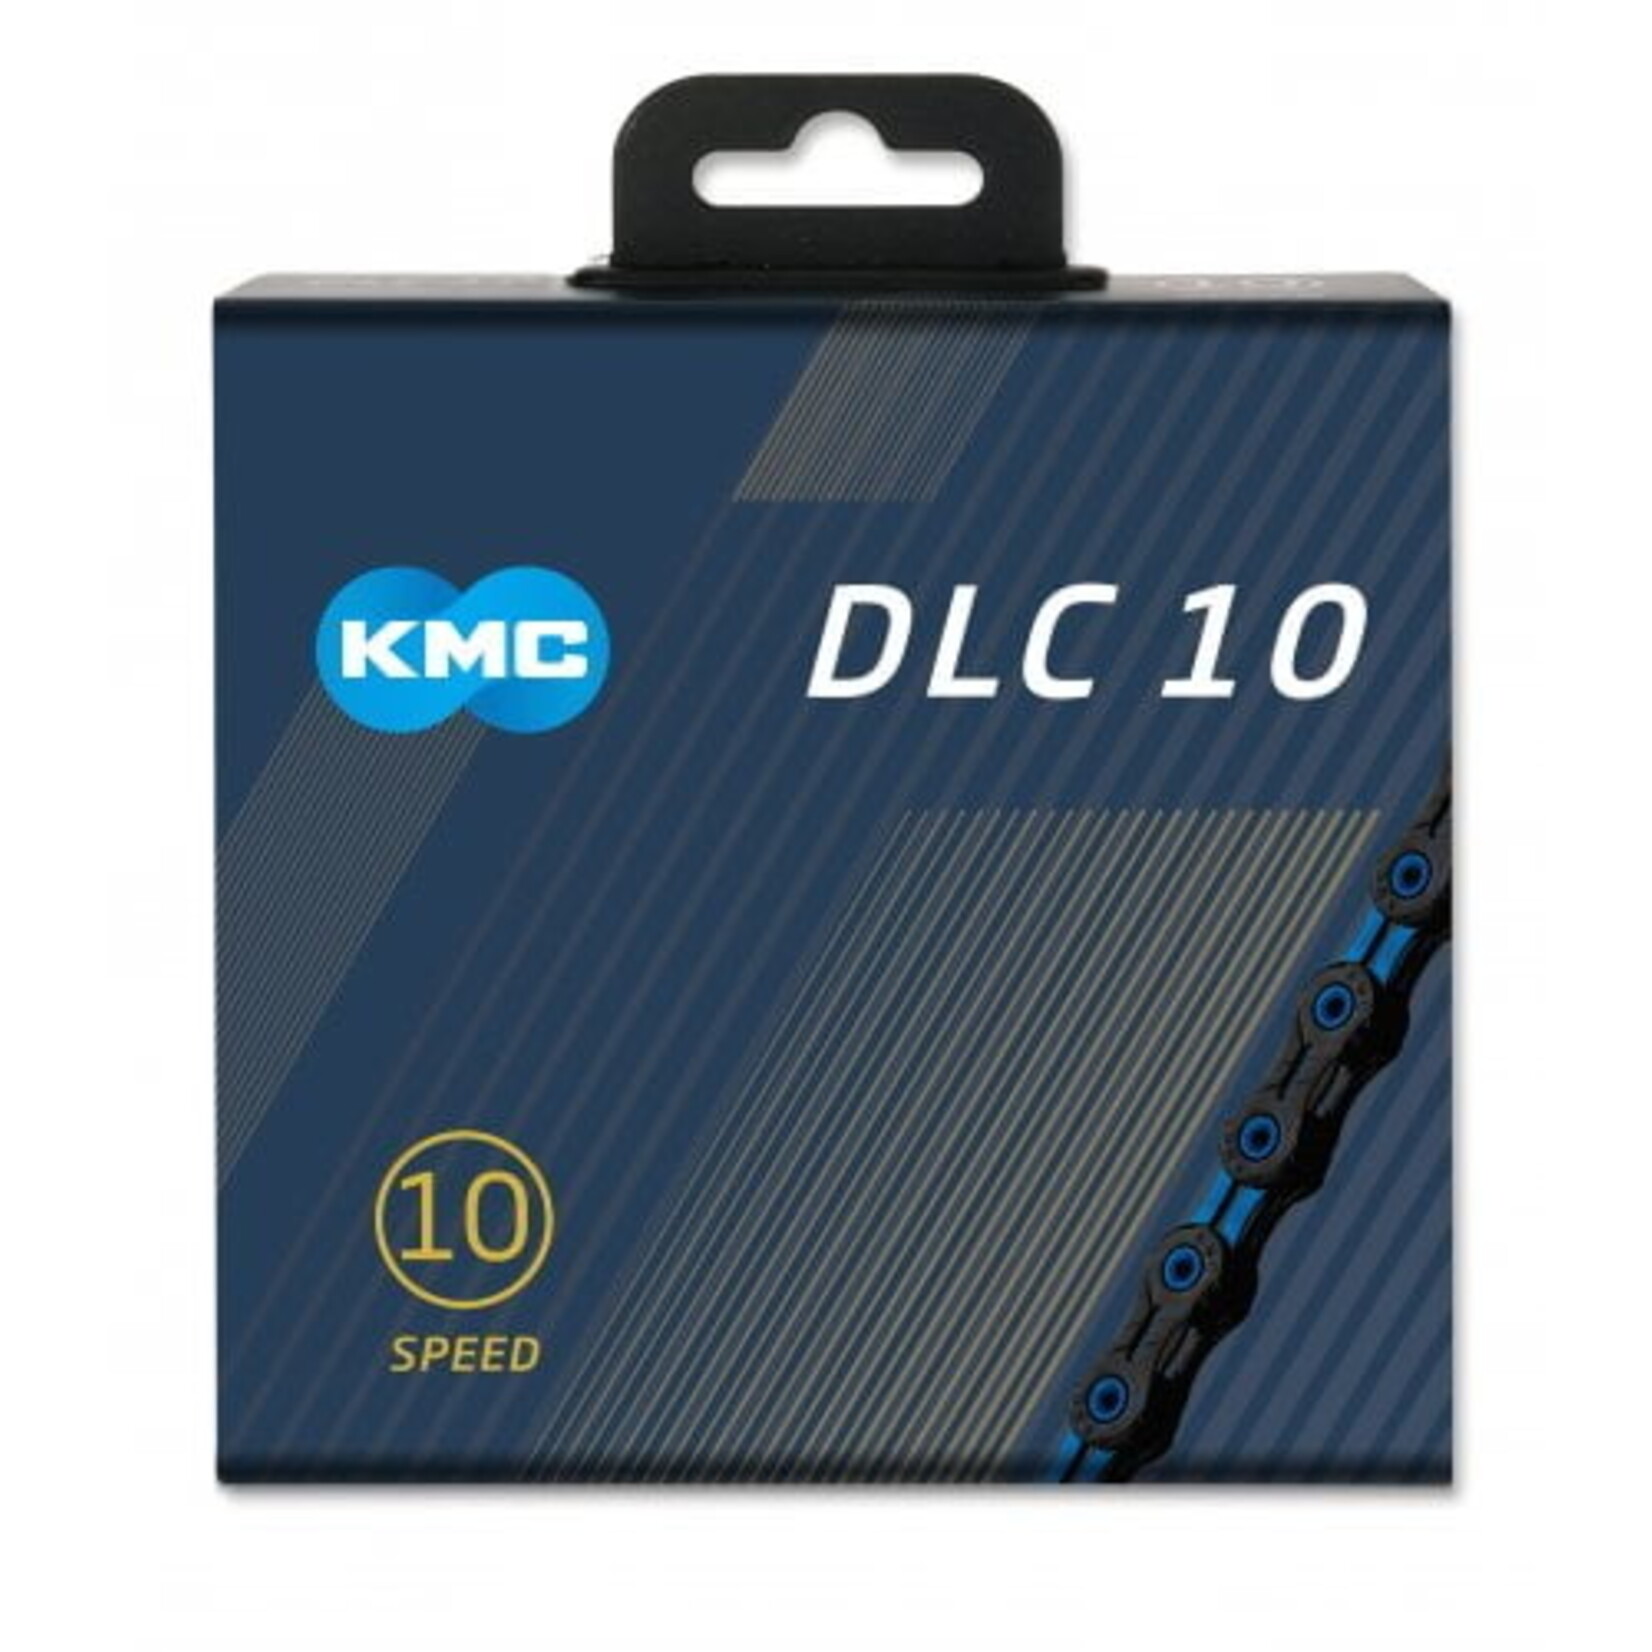 KMC DLC 10 chain 116 links 10 speed